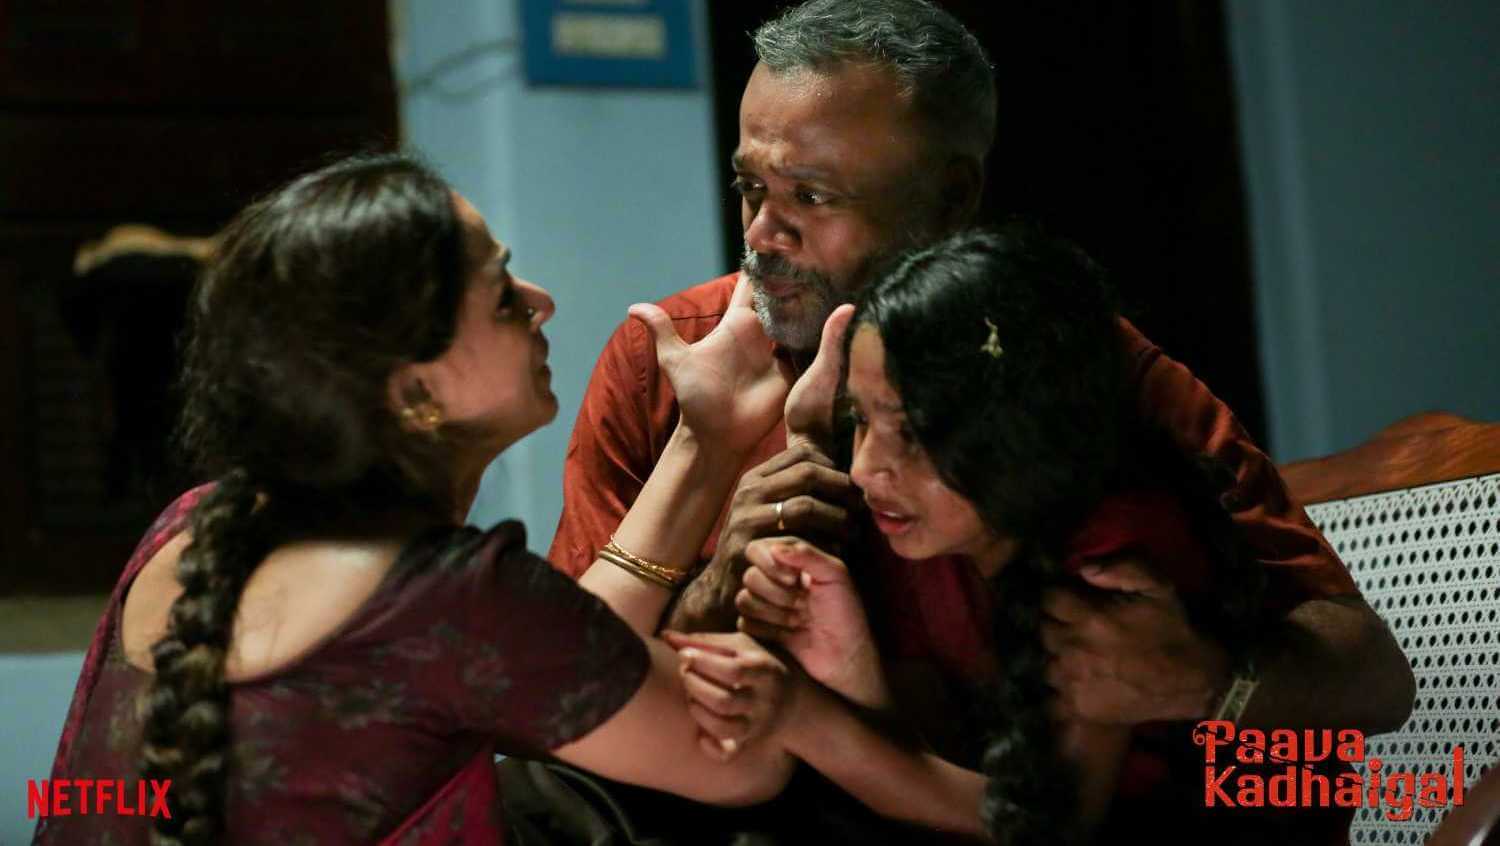 #Paava Kadhaigal 2020 film Reviews and Ratings